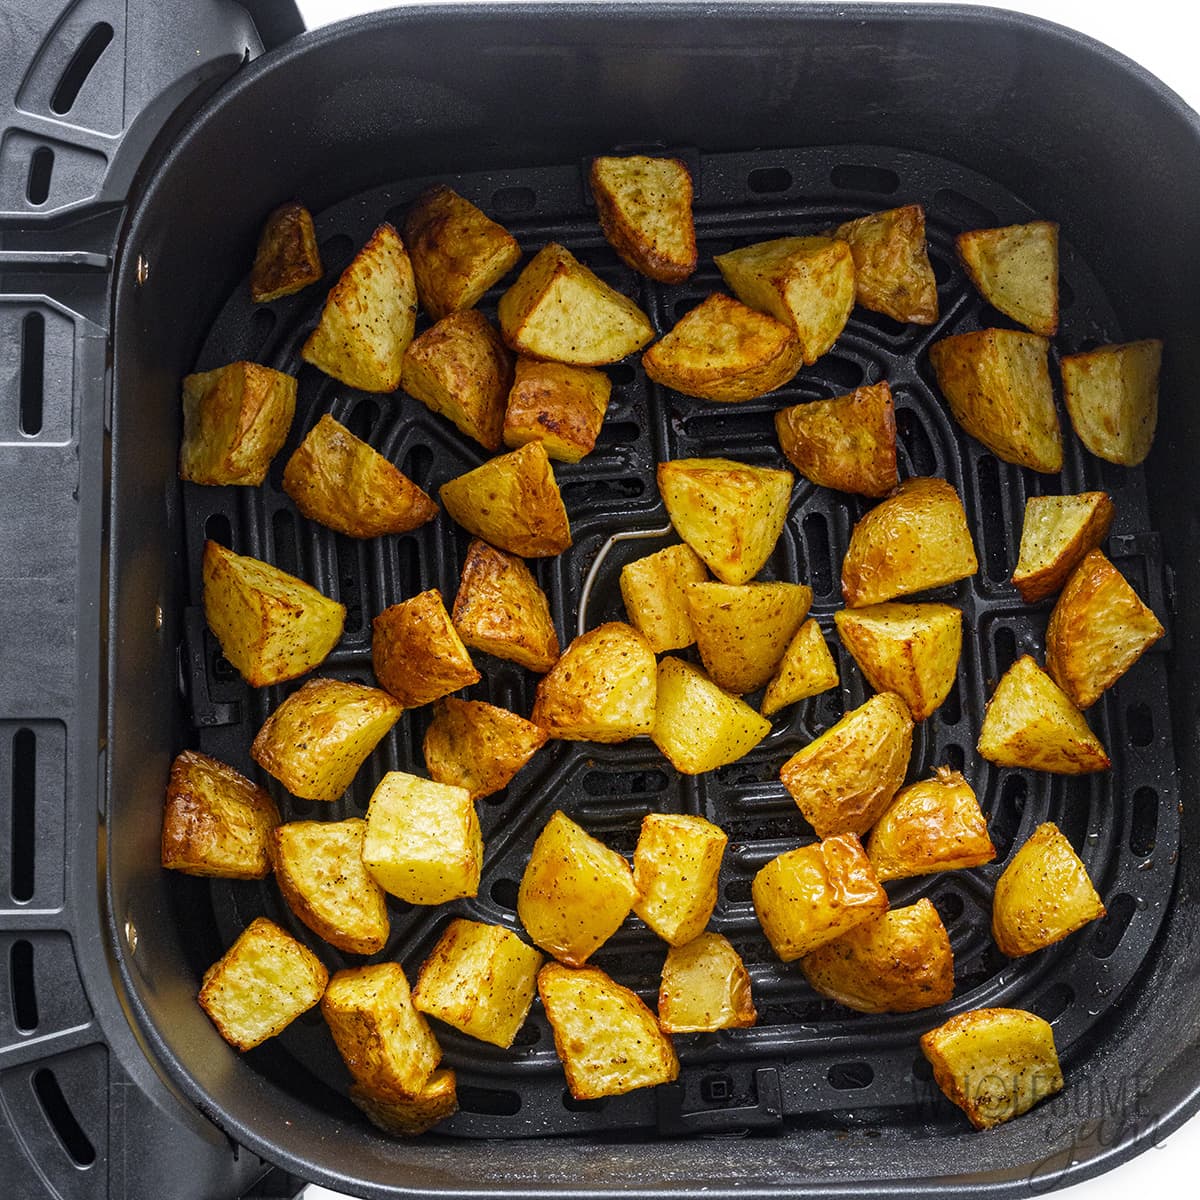 Roasted potatoes in air fryer.